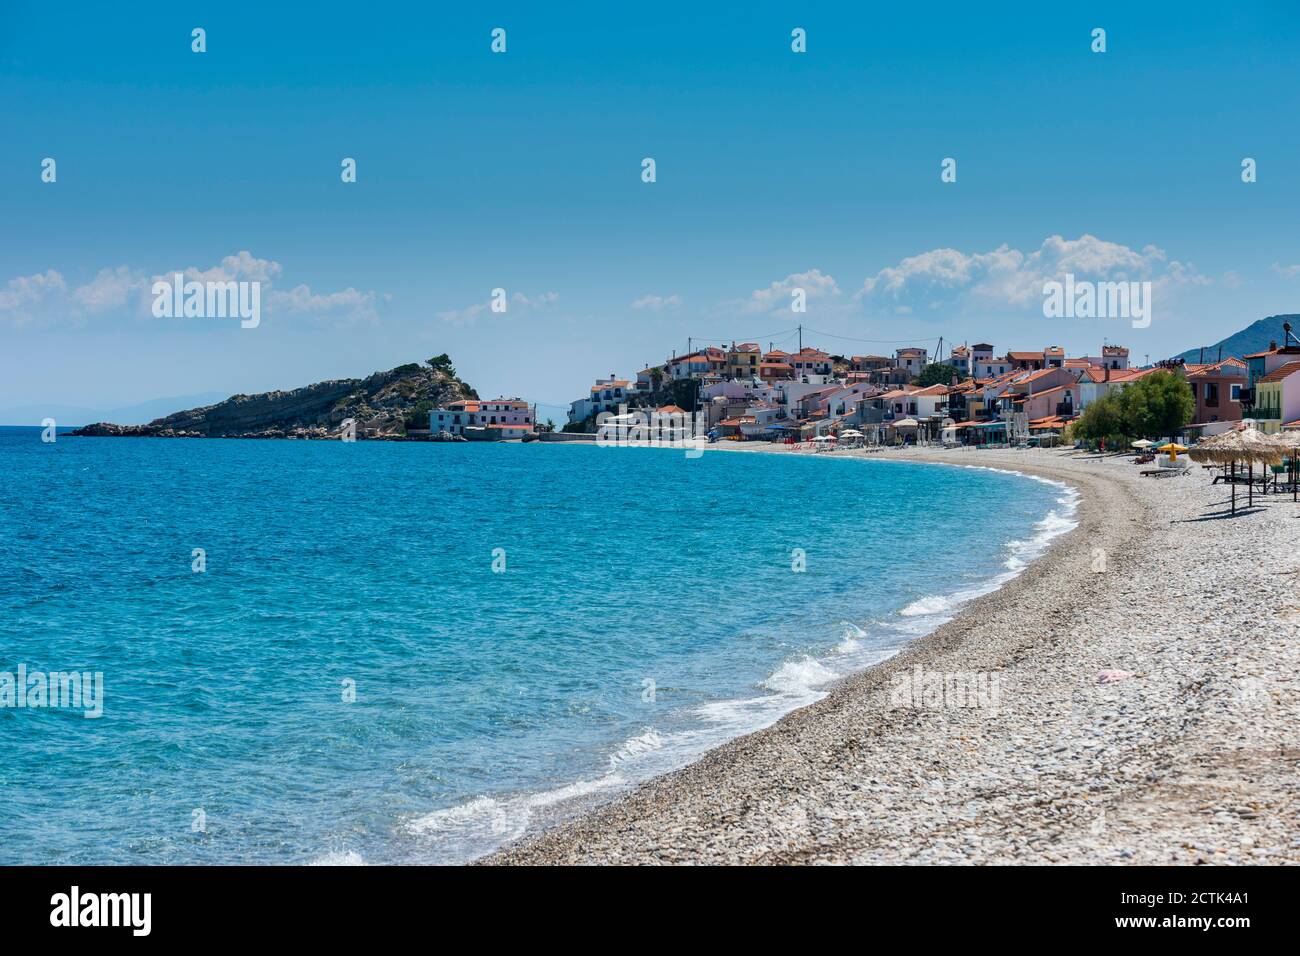 Greece, North Aegean, Kokkari, Rocky coastal beach in summer with village in background Stock Photo